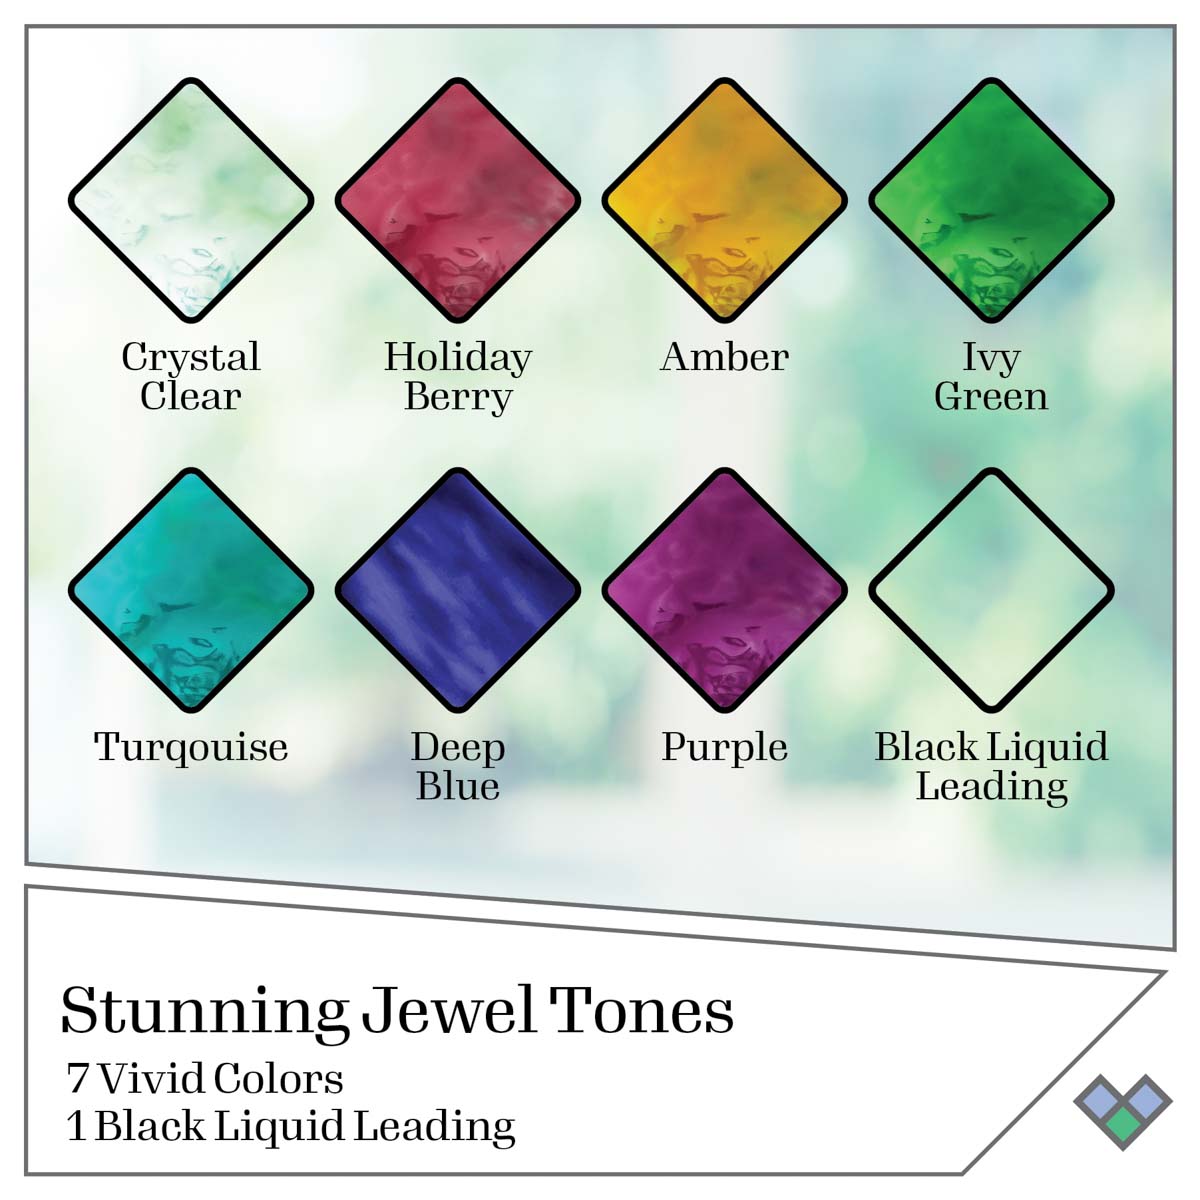 Gallery Glass ® Paint Set - Jewel Tones, 8 pc - PROMOGGJL22